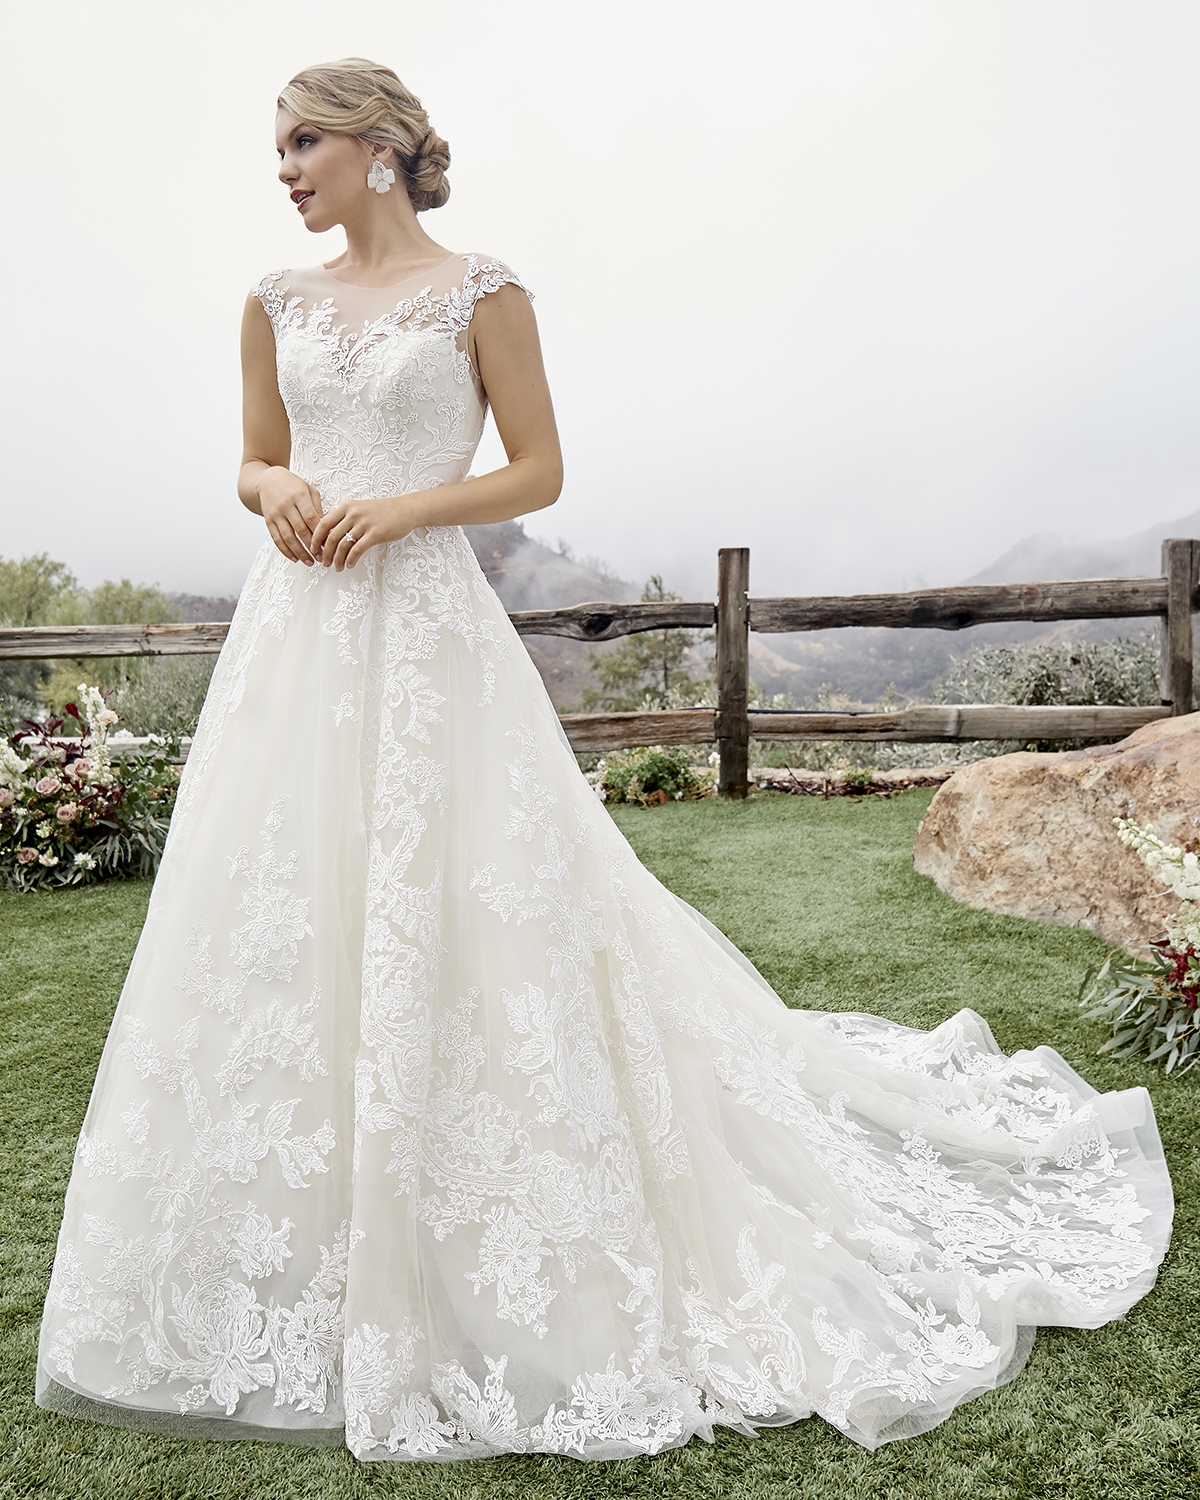 casablanca-bridal-gown-04.jpg